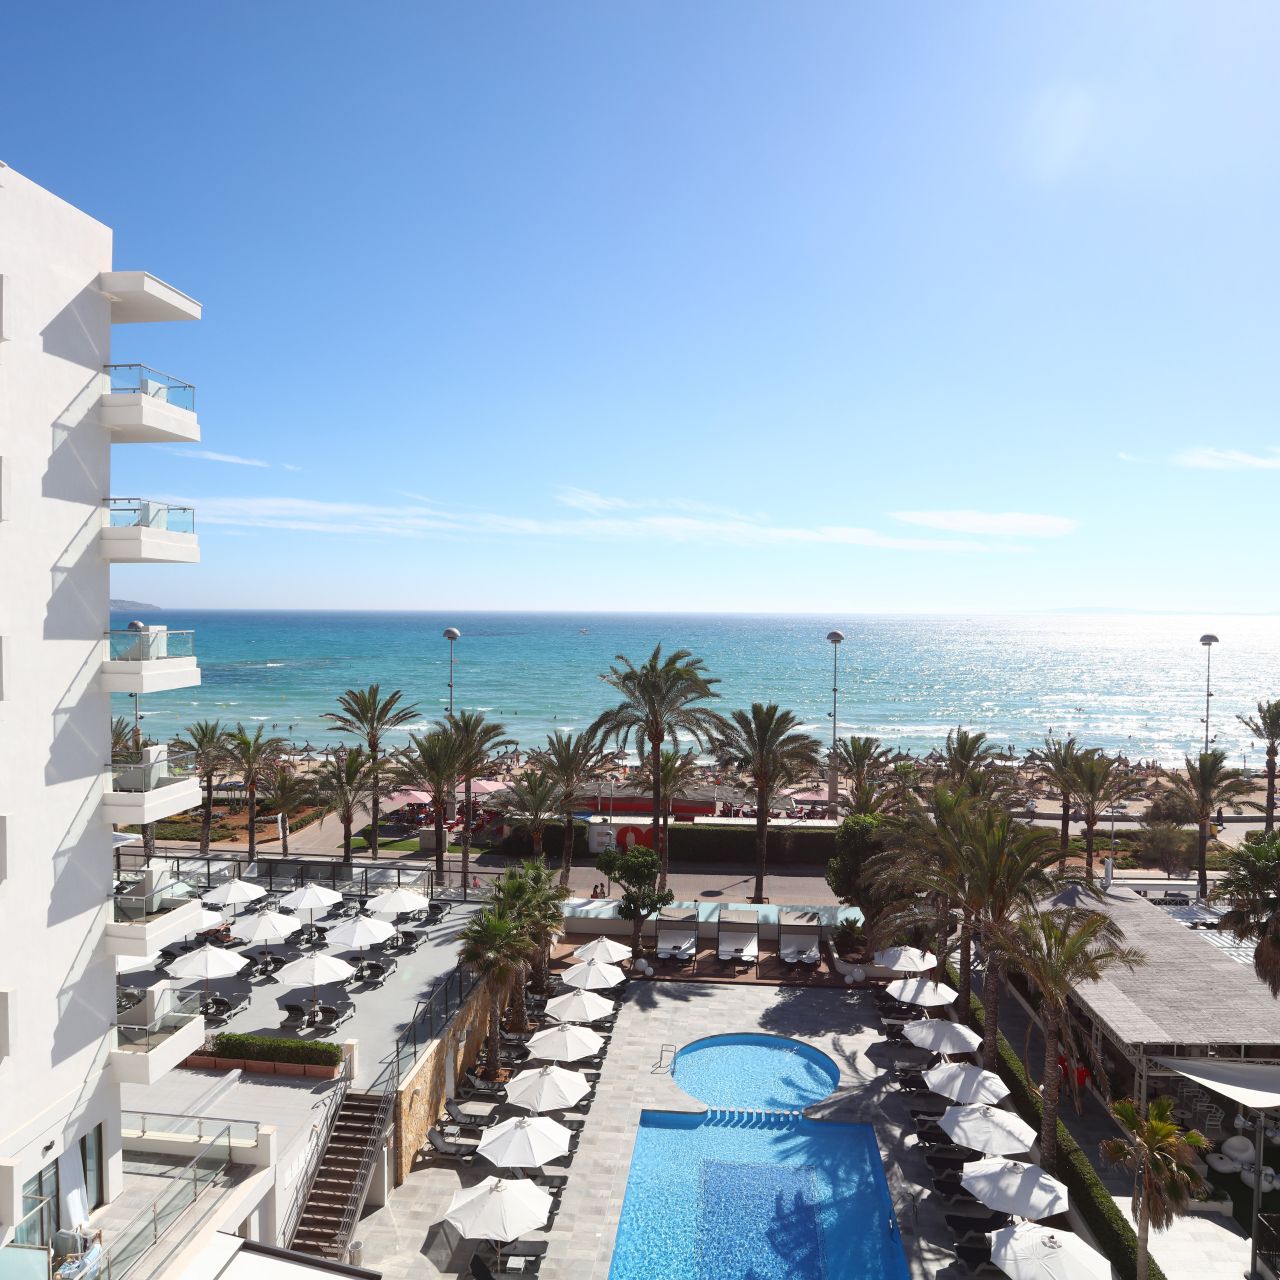 Hotel Playa Golf 4*Sup - Palma de Mallorca - Great prices at HOTEL INFO